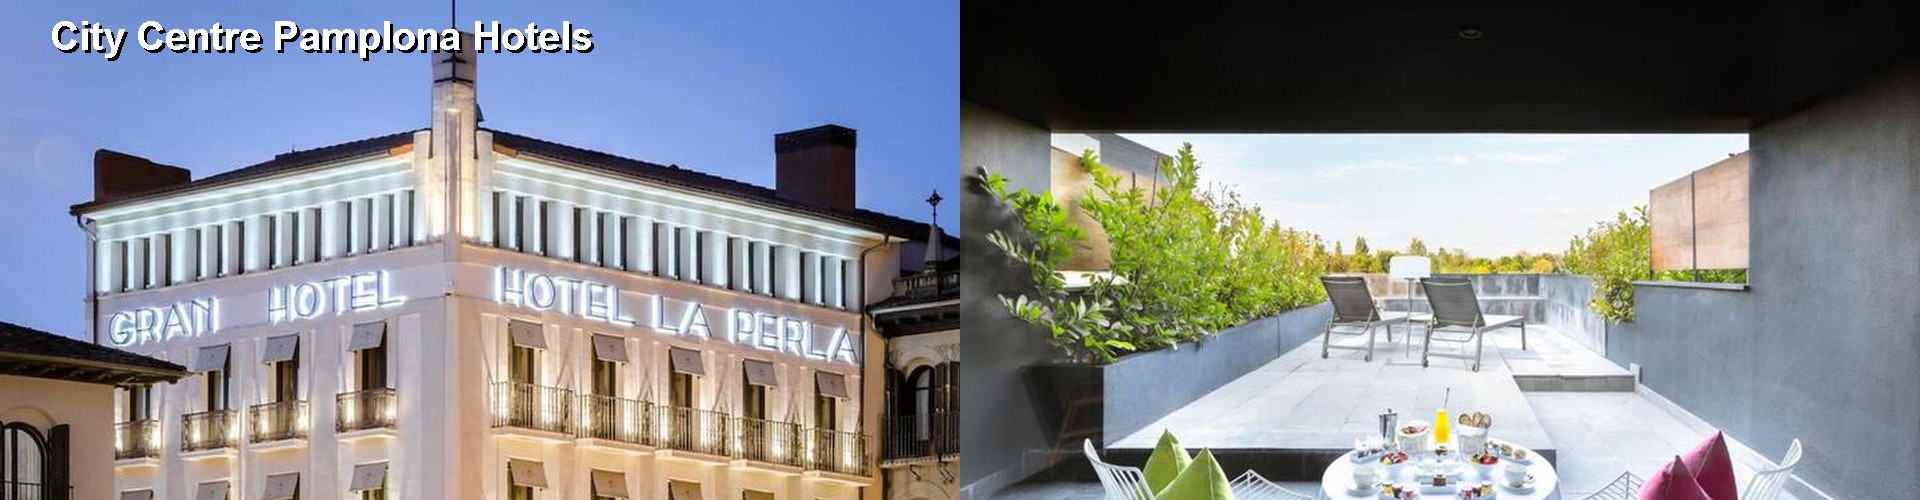 5 Best Hotels near City Centre Pamplona